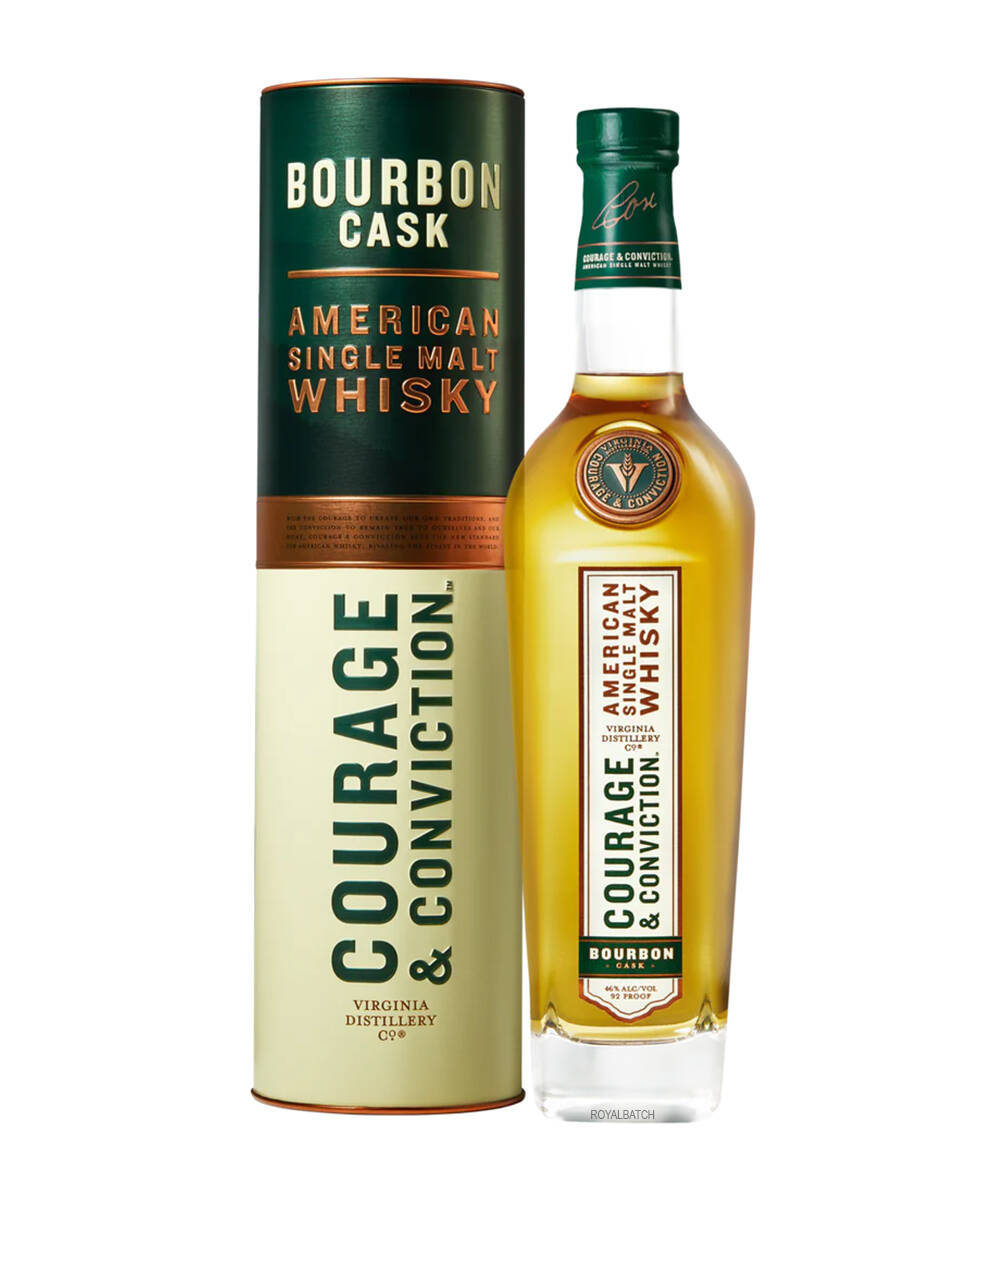 Courage & Conviction Bourbon Cask American Single Malt Whisky